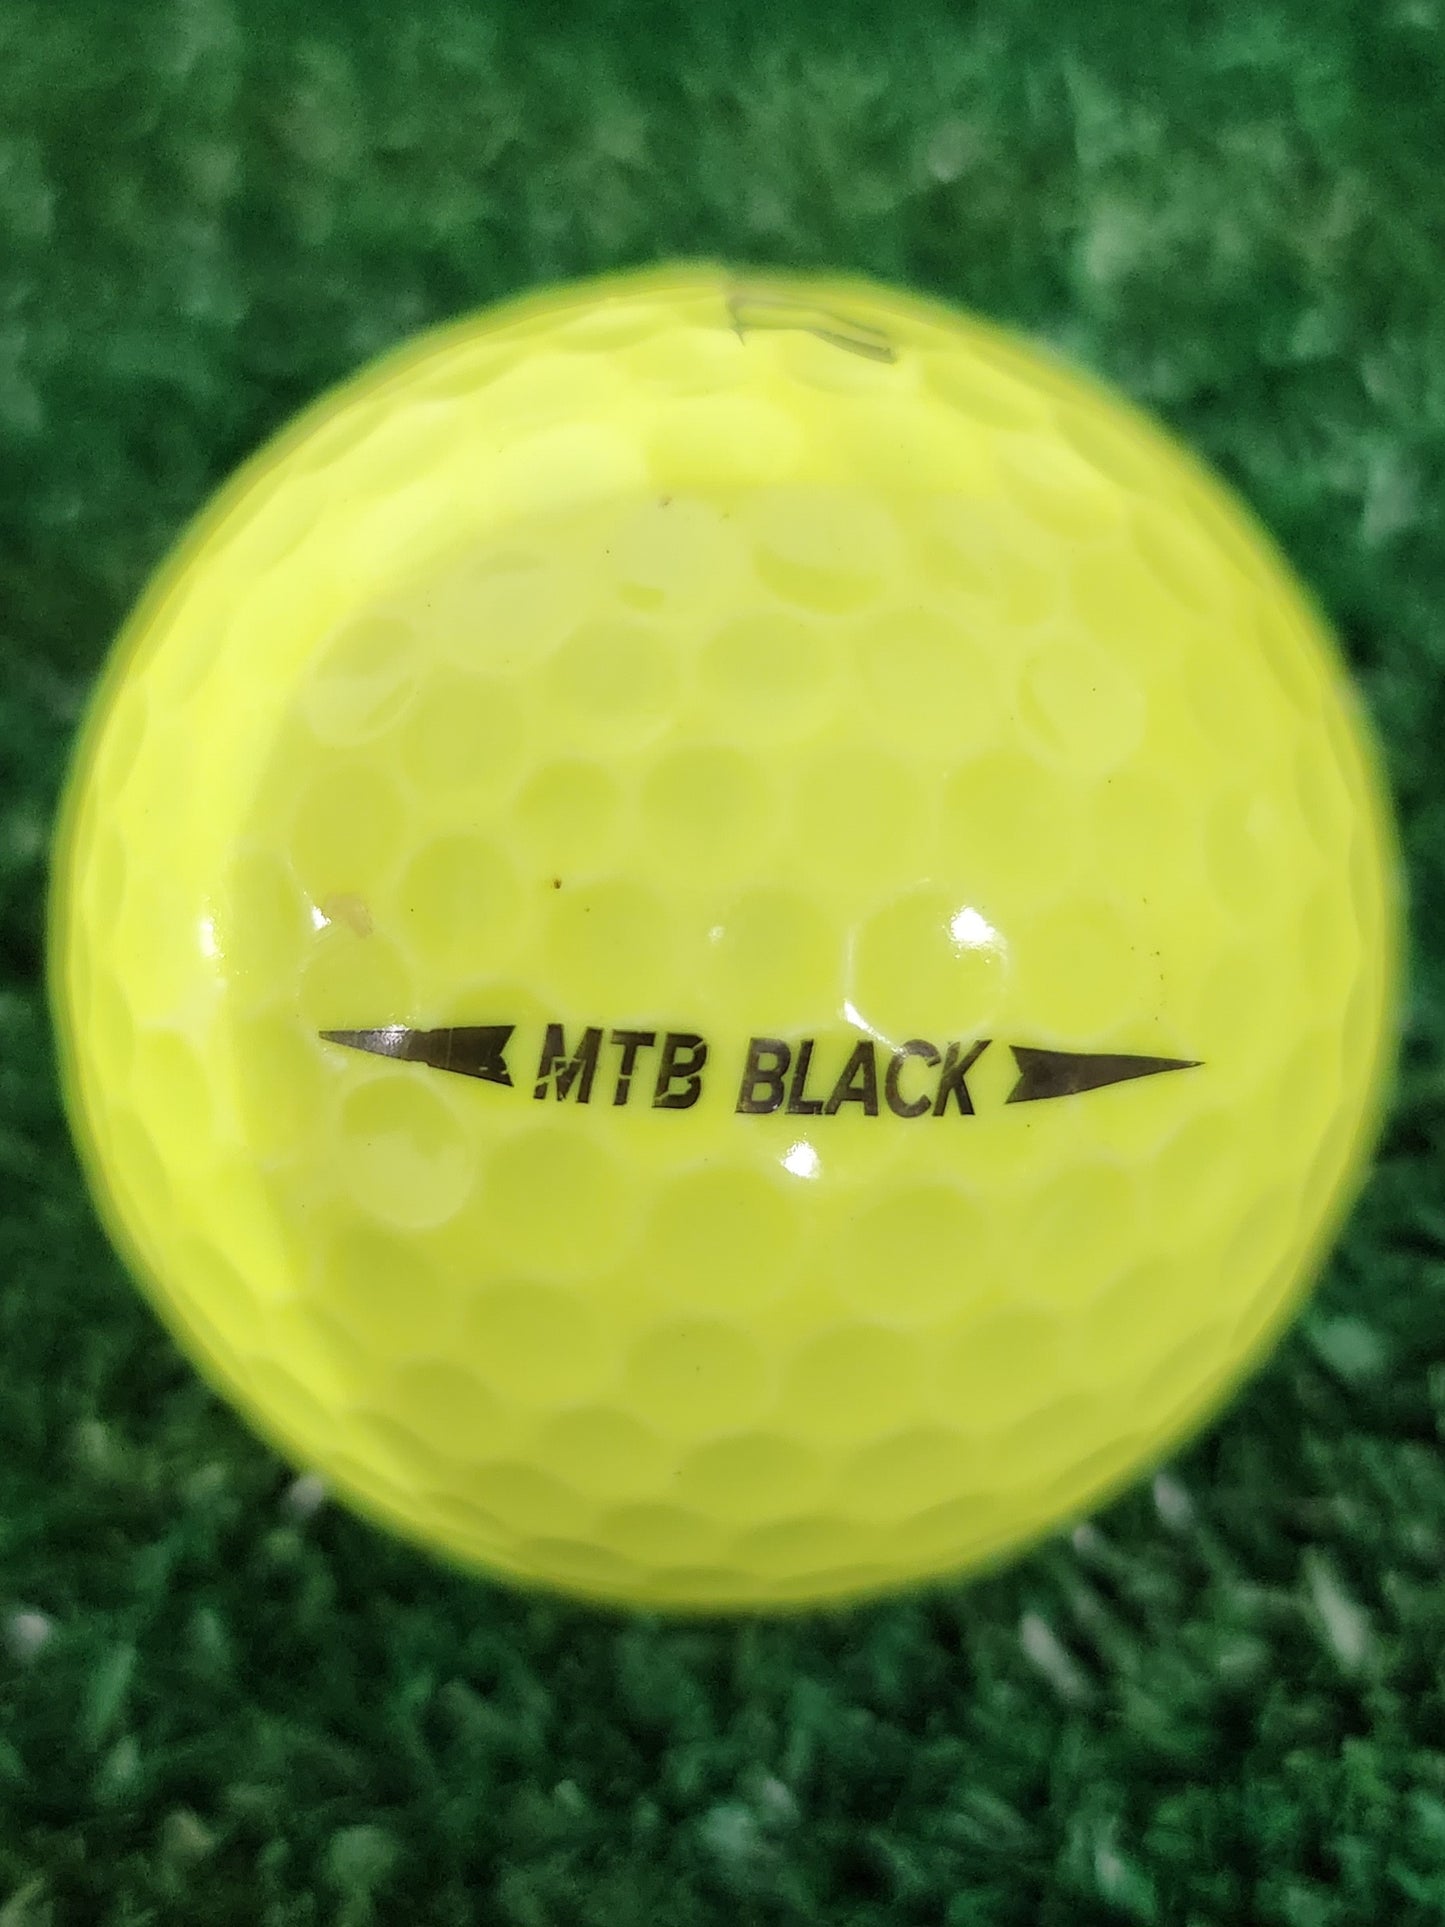 Snell MTB Black yellow - 1 dozen